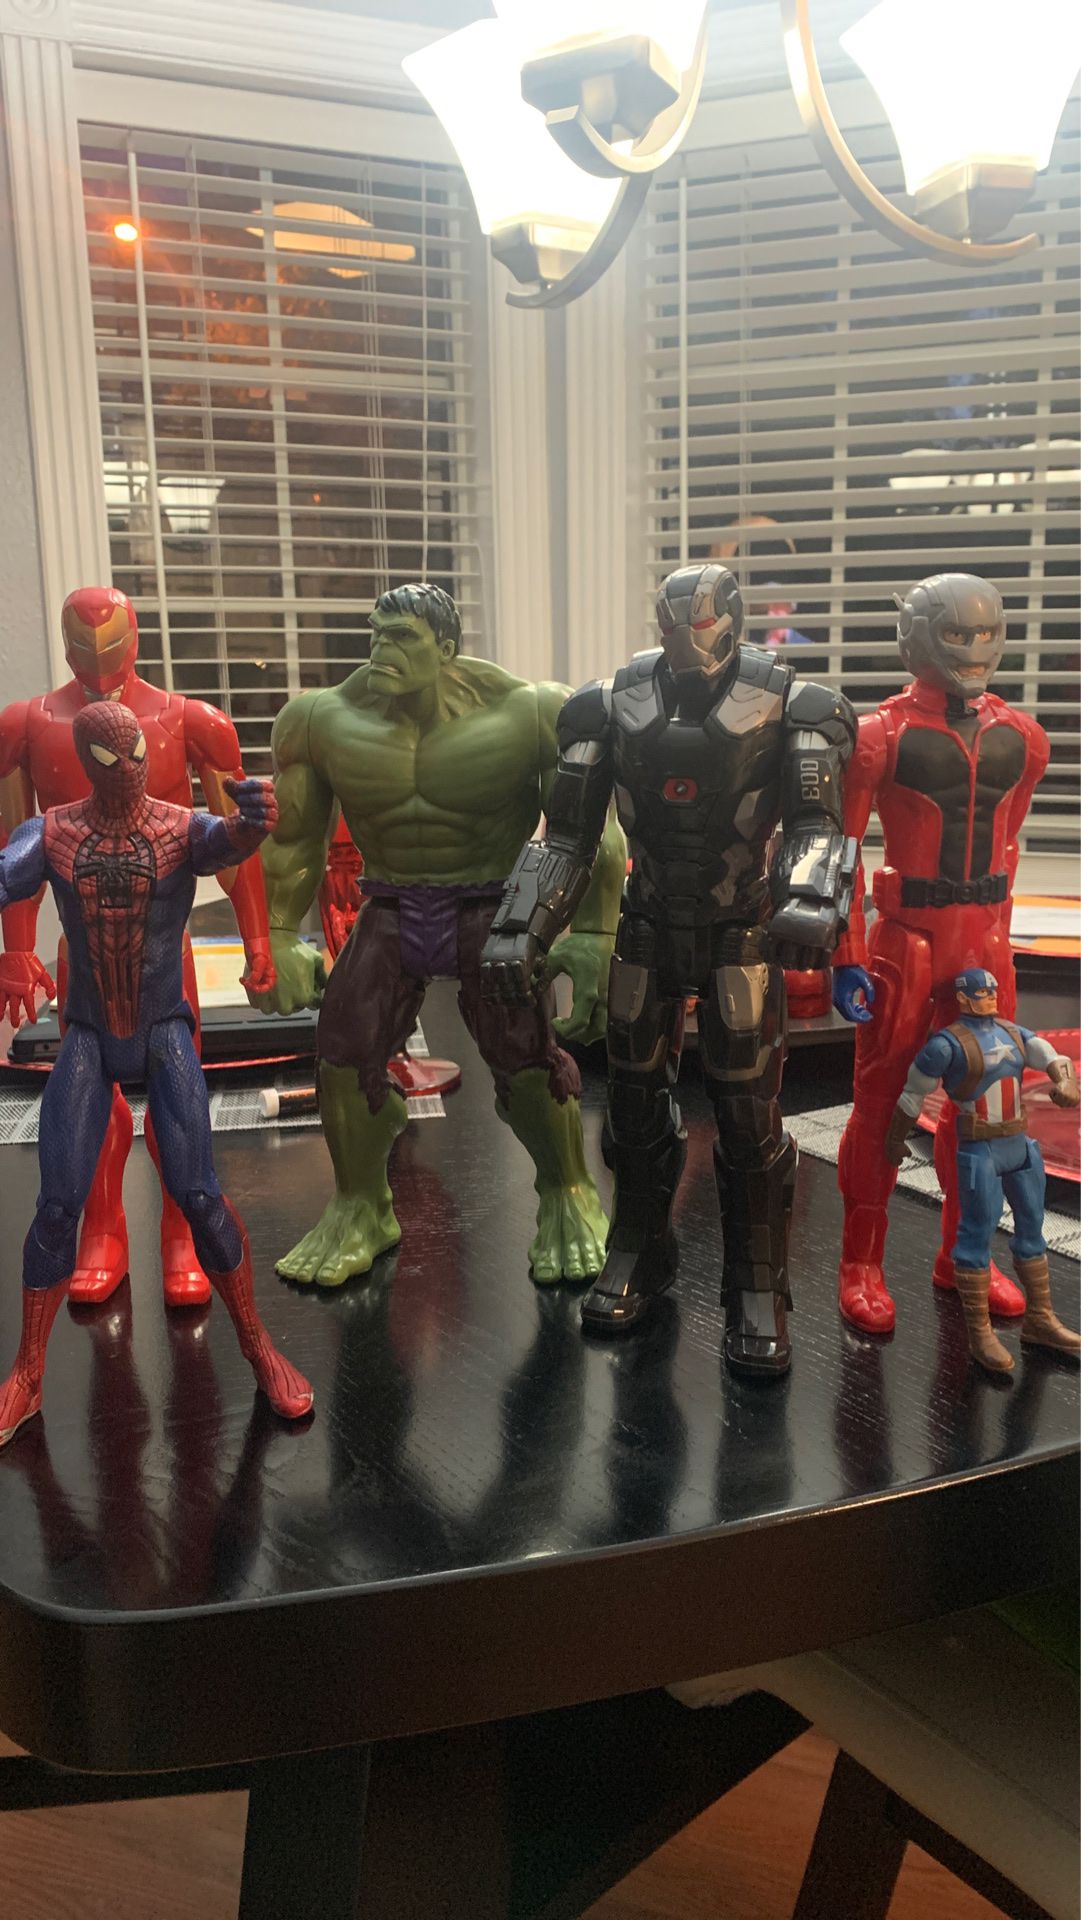 Marvel super hero’s figurines set of 6